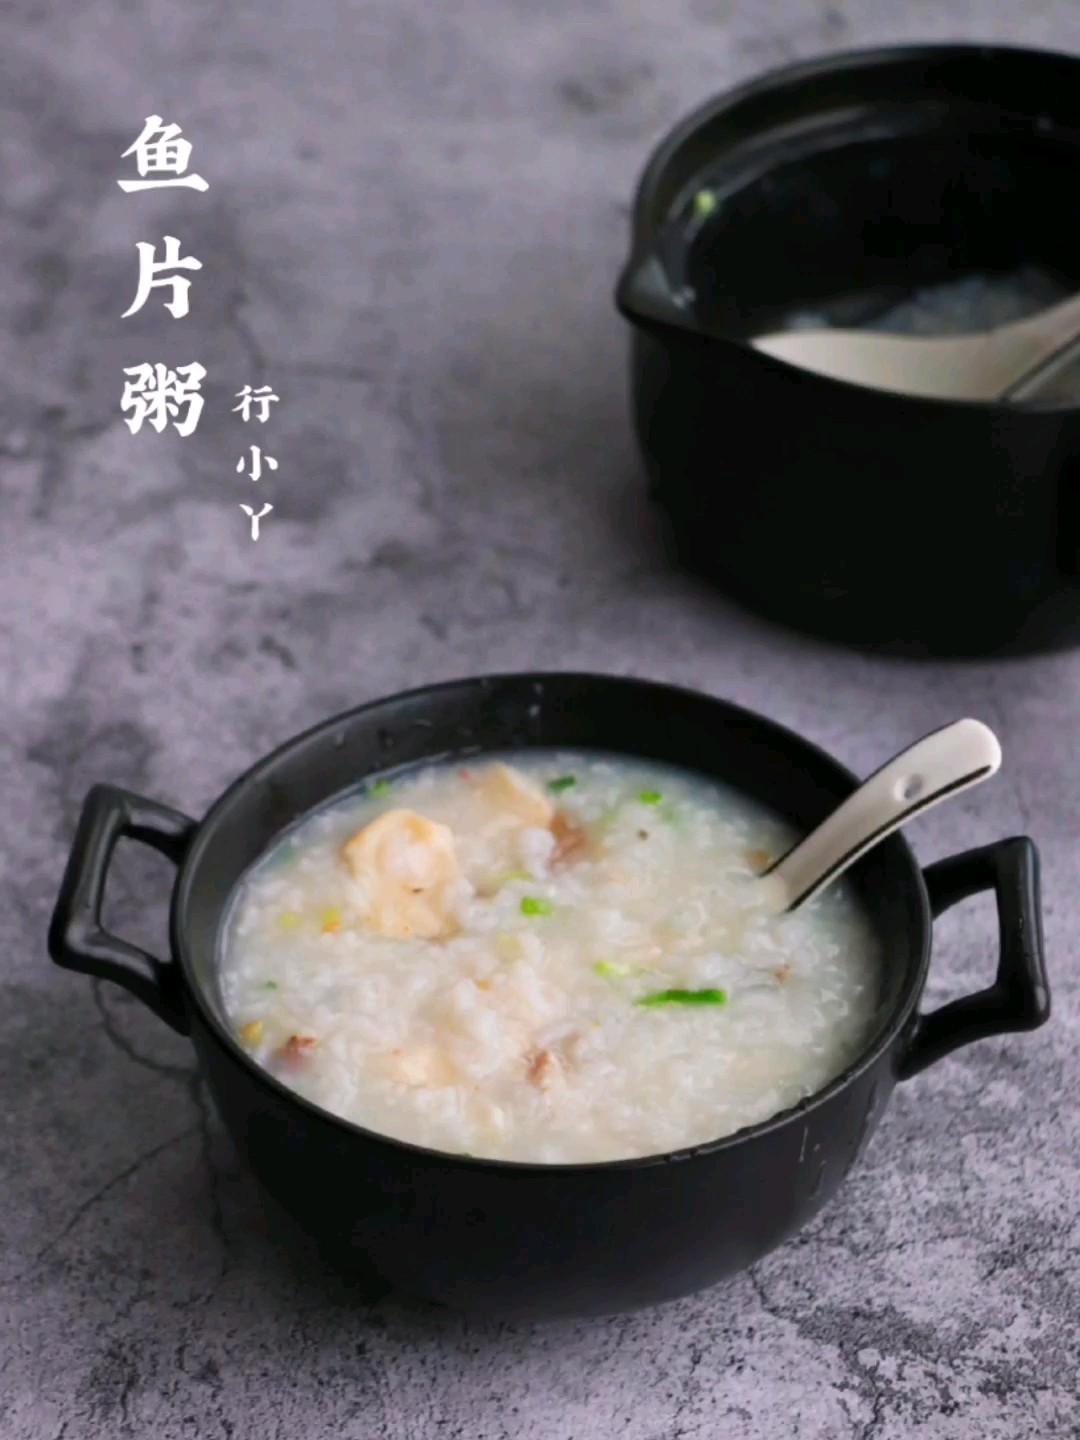 Fish Fillet Congee recipe